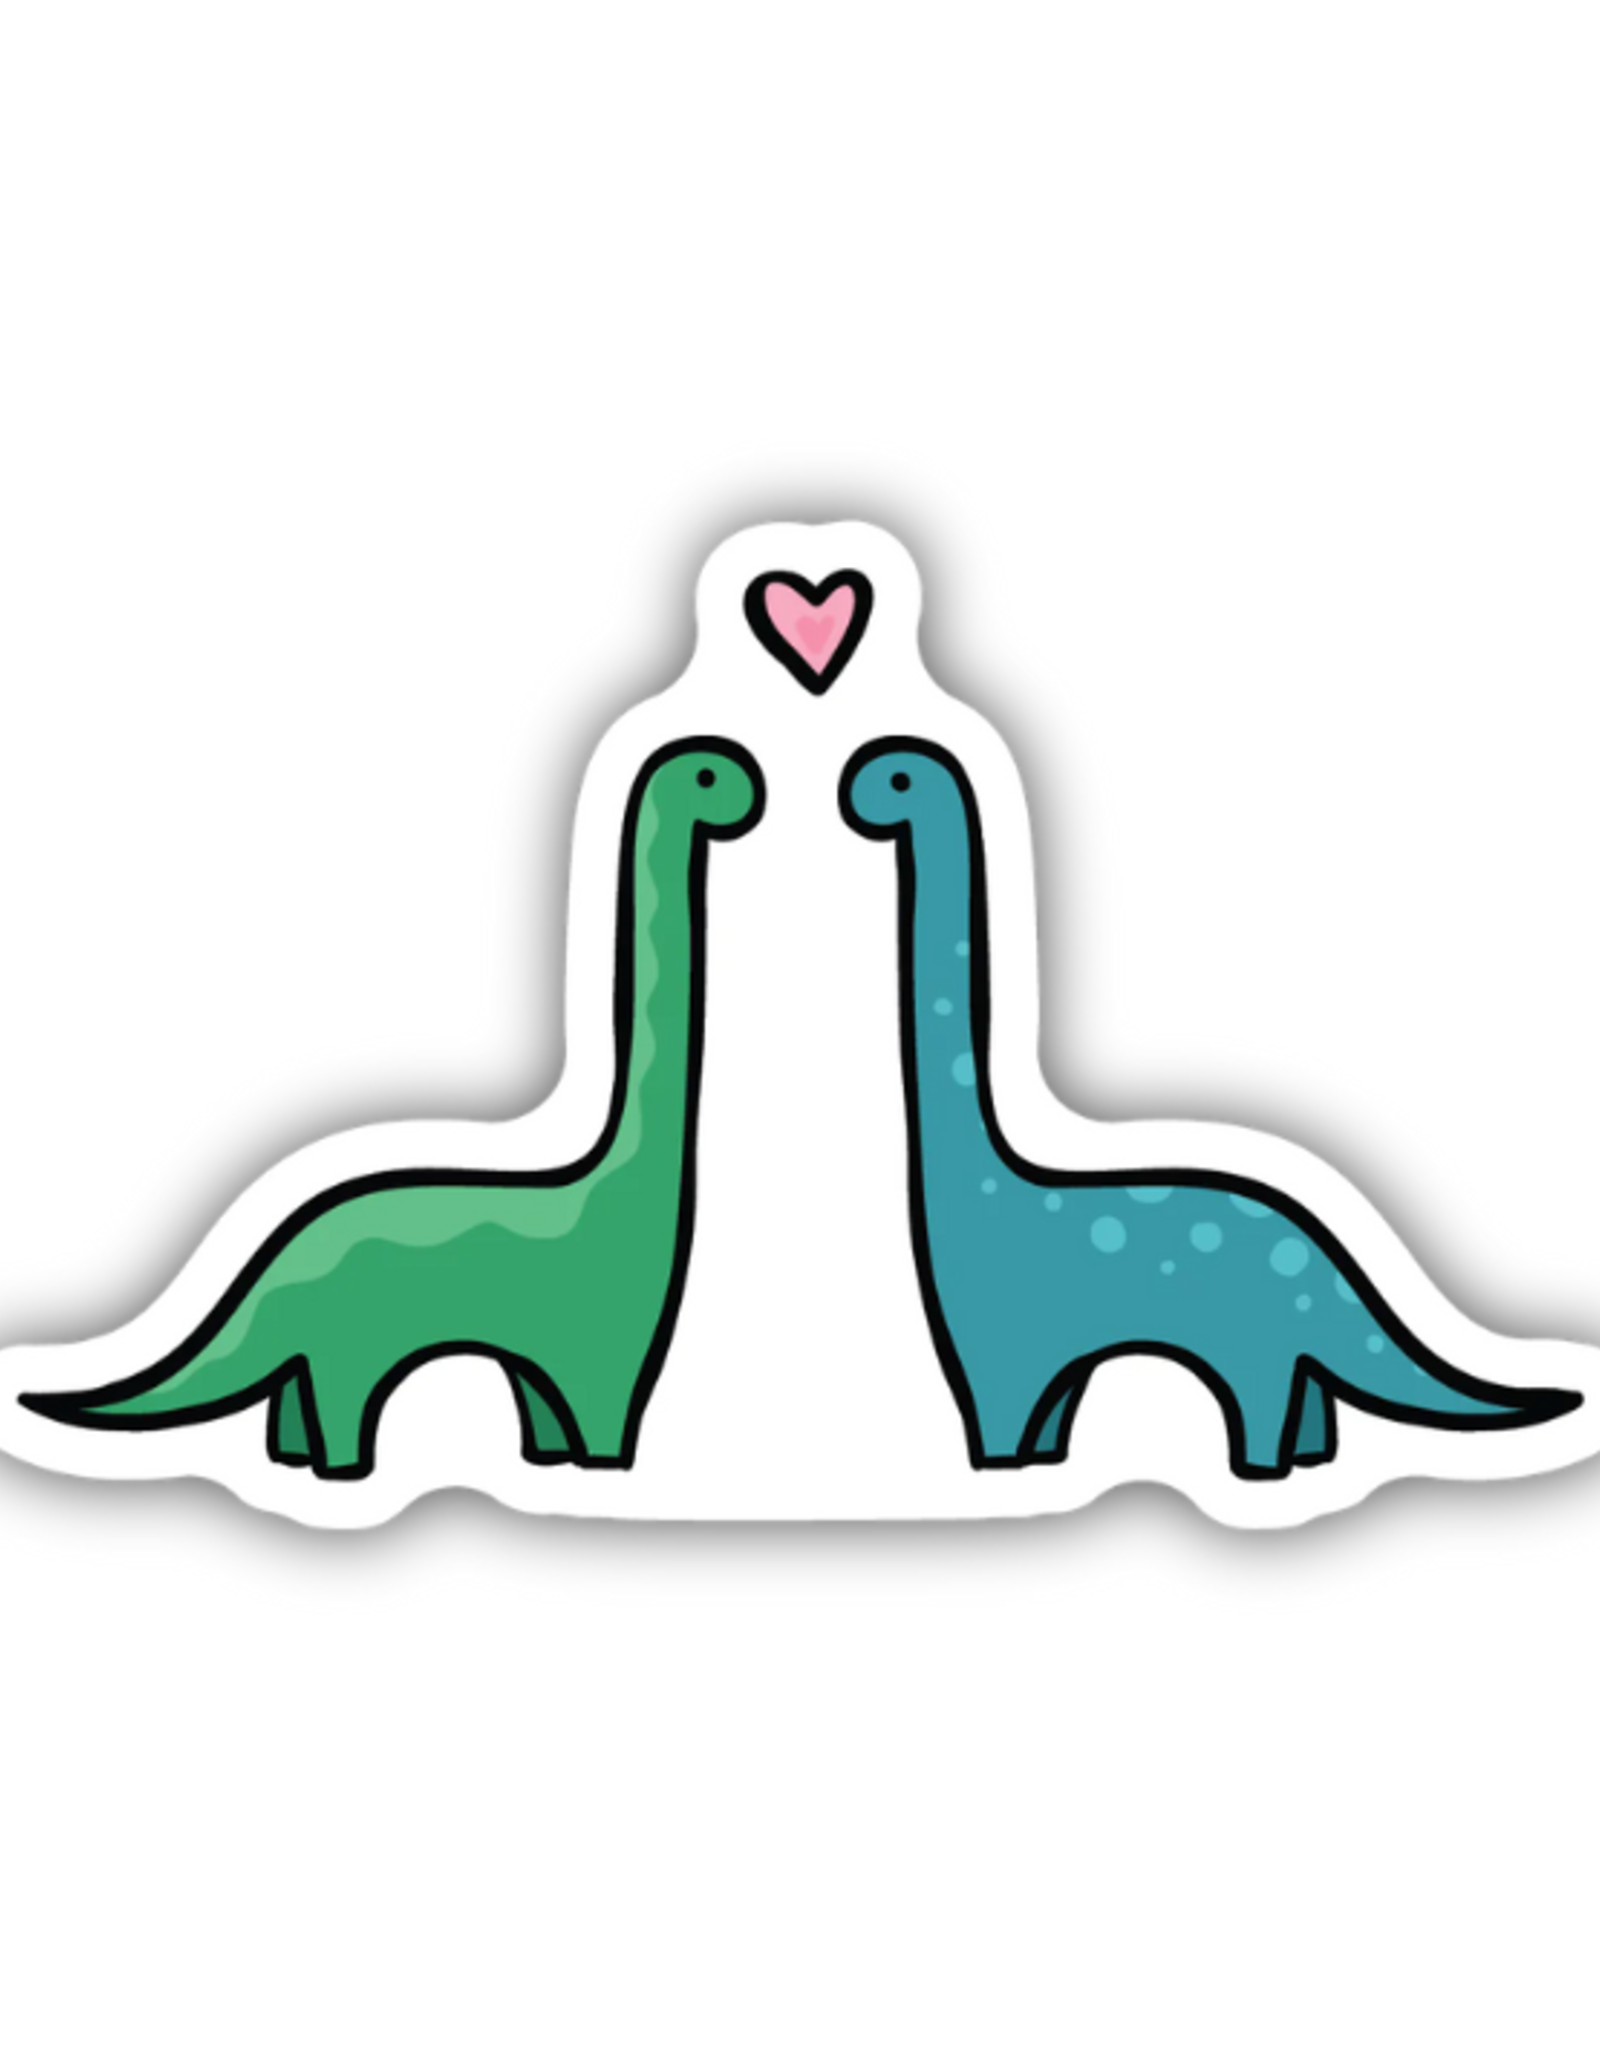 Stickers Northwest Inc. Stickers Northwest Inc. - Dinosaurs in Love Sticker